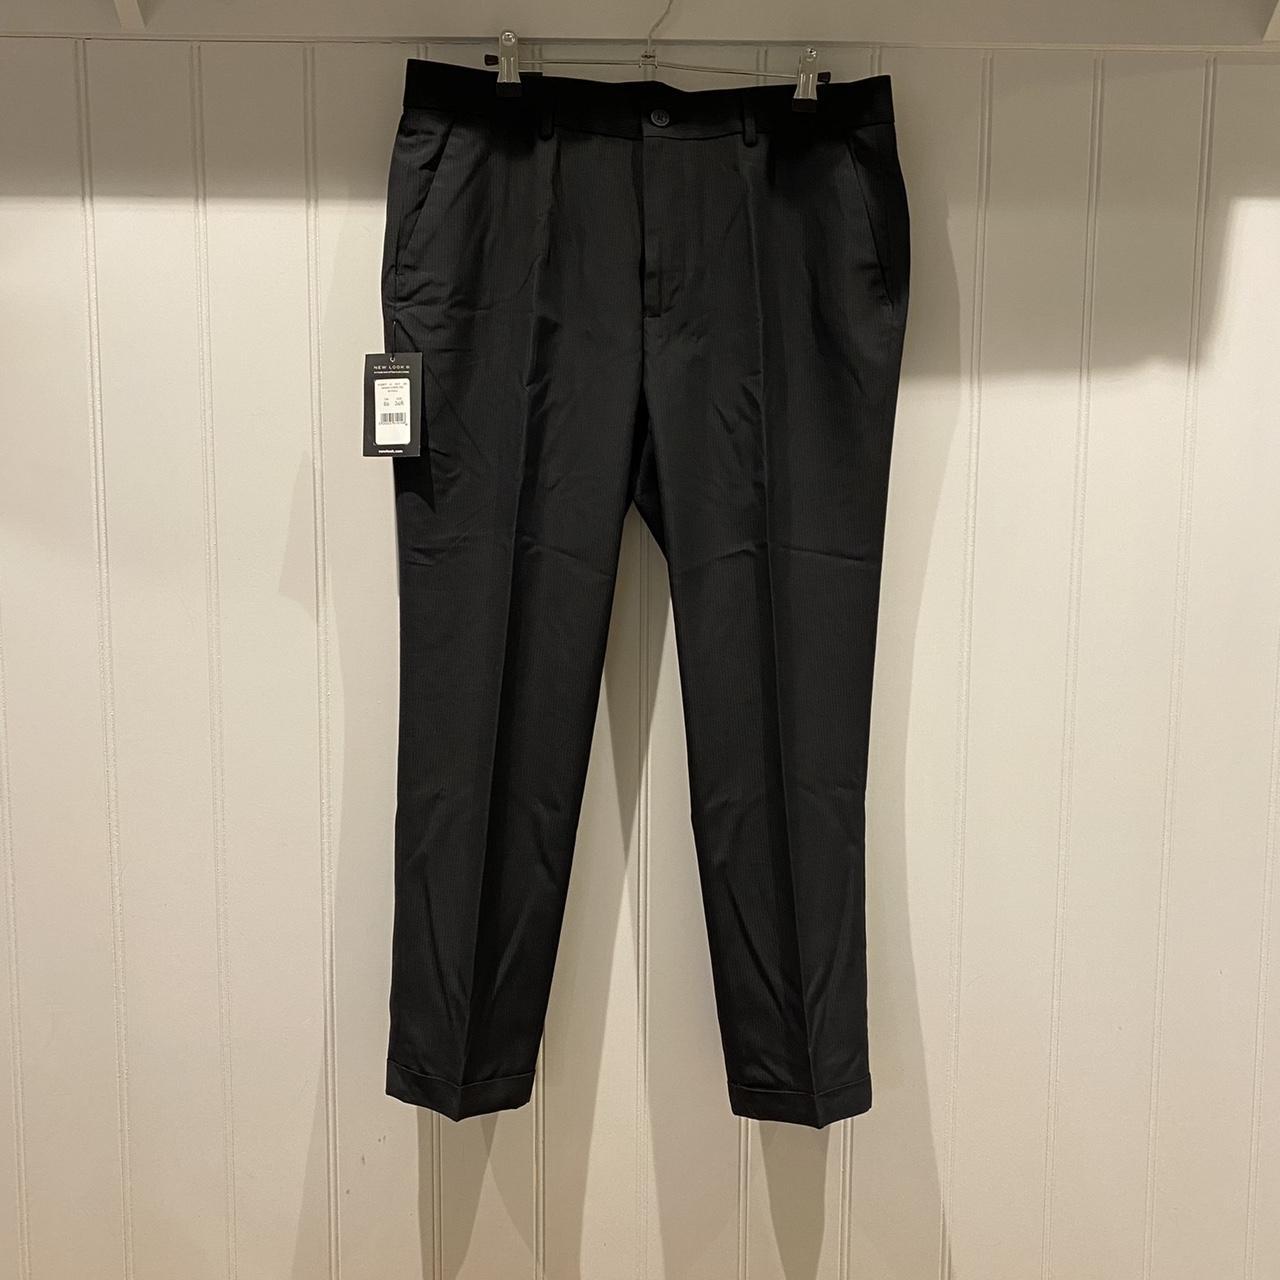 New look pinstripe suit trousers in black Size:... - Depop